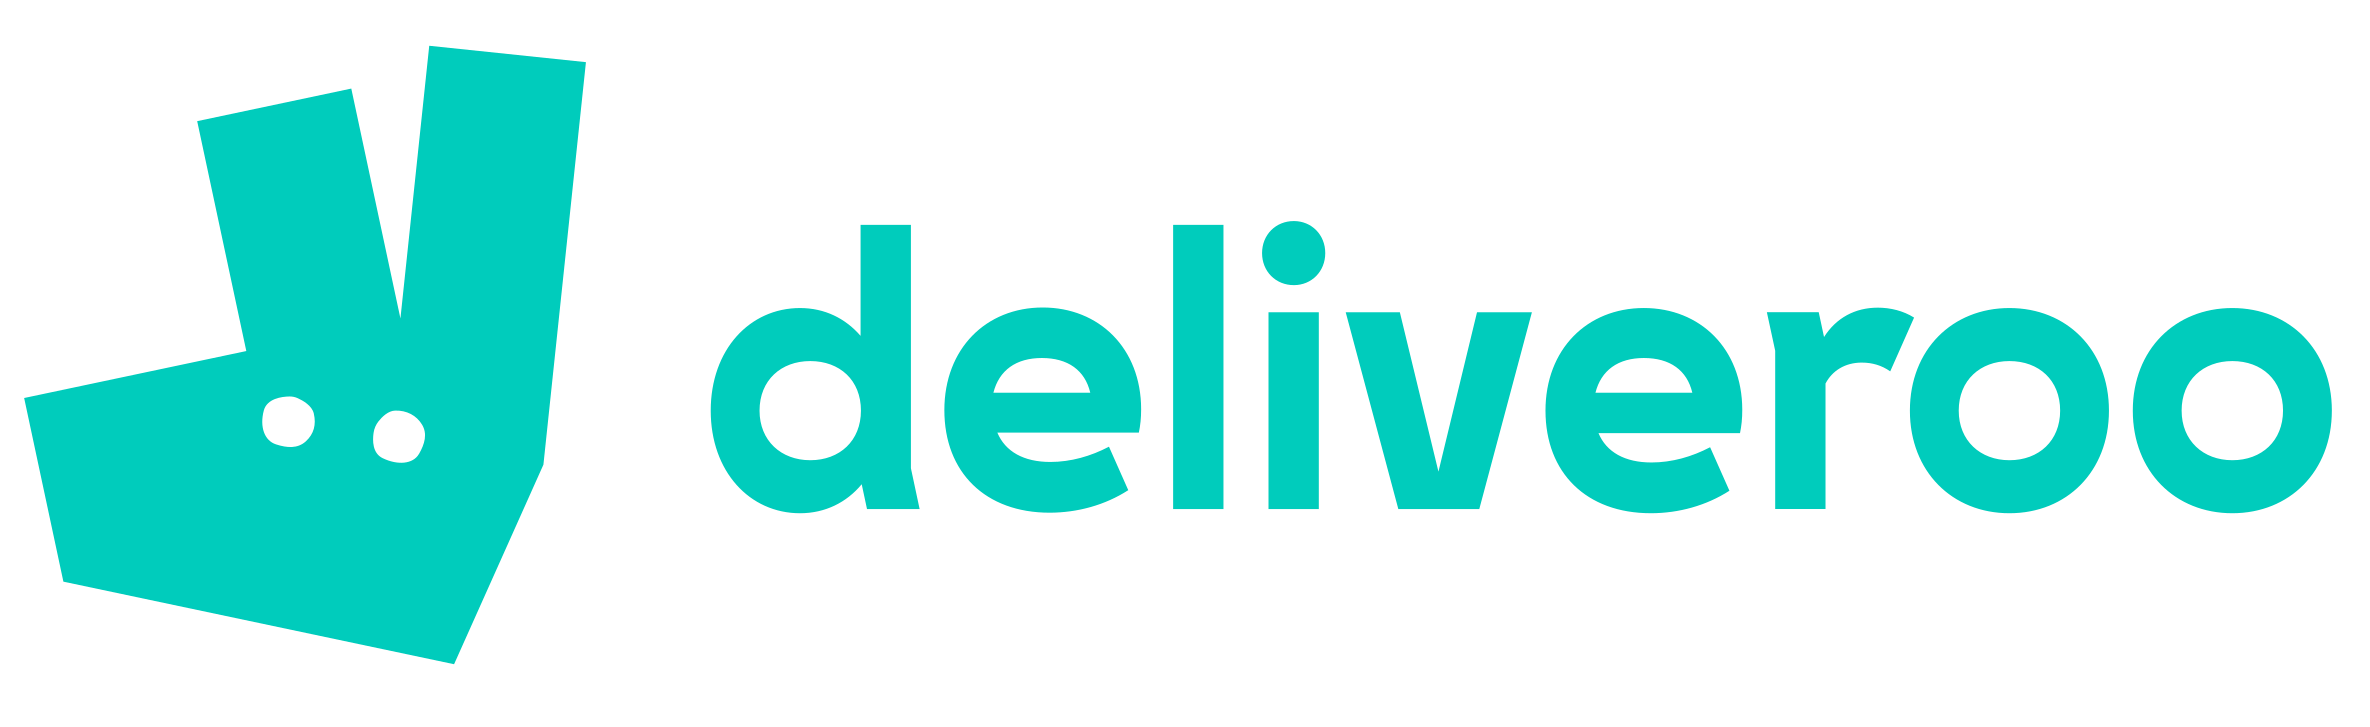 Deliveroo-Logo.wine